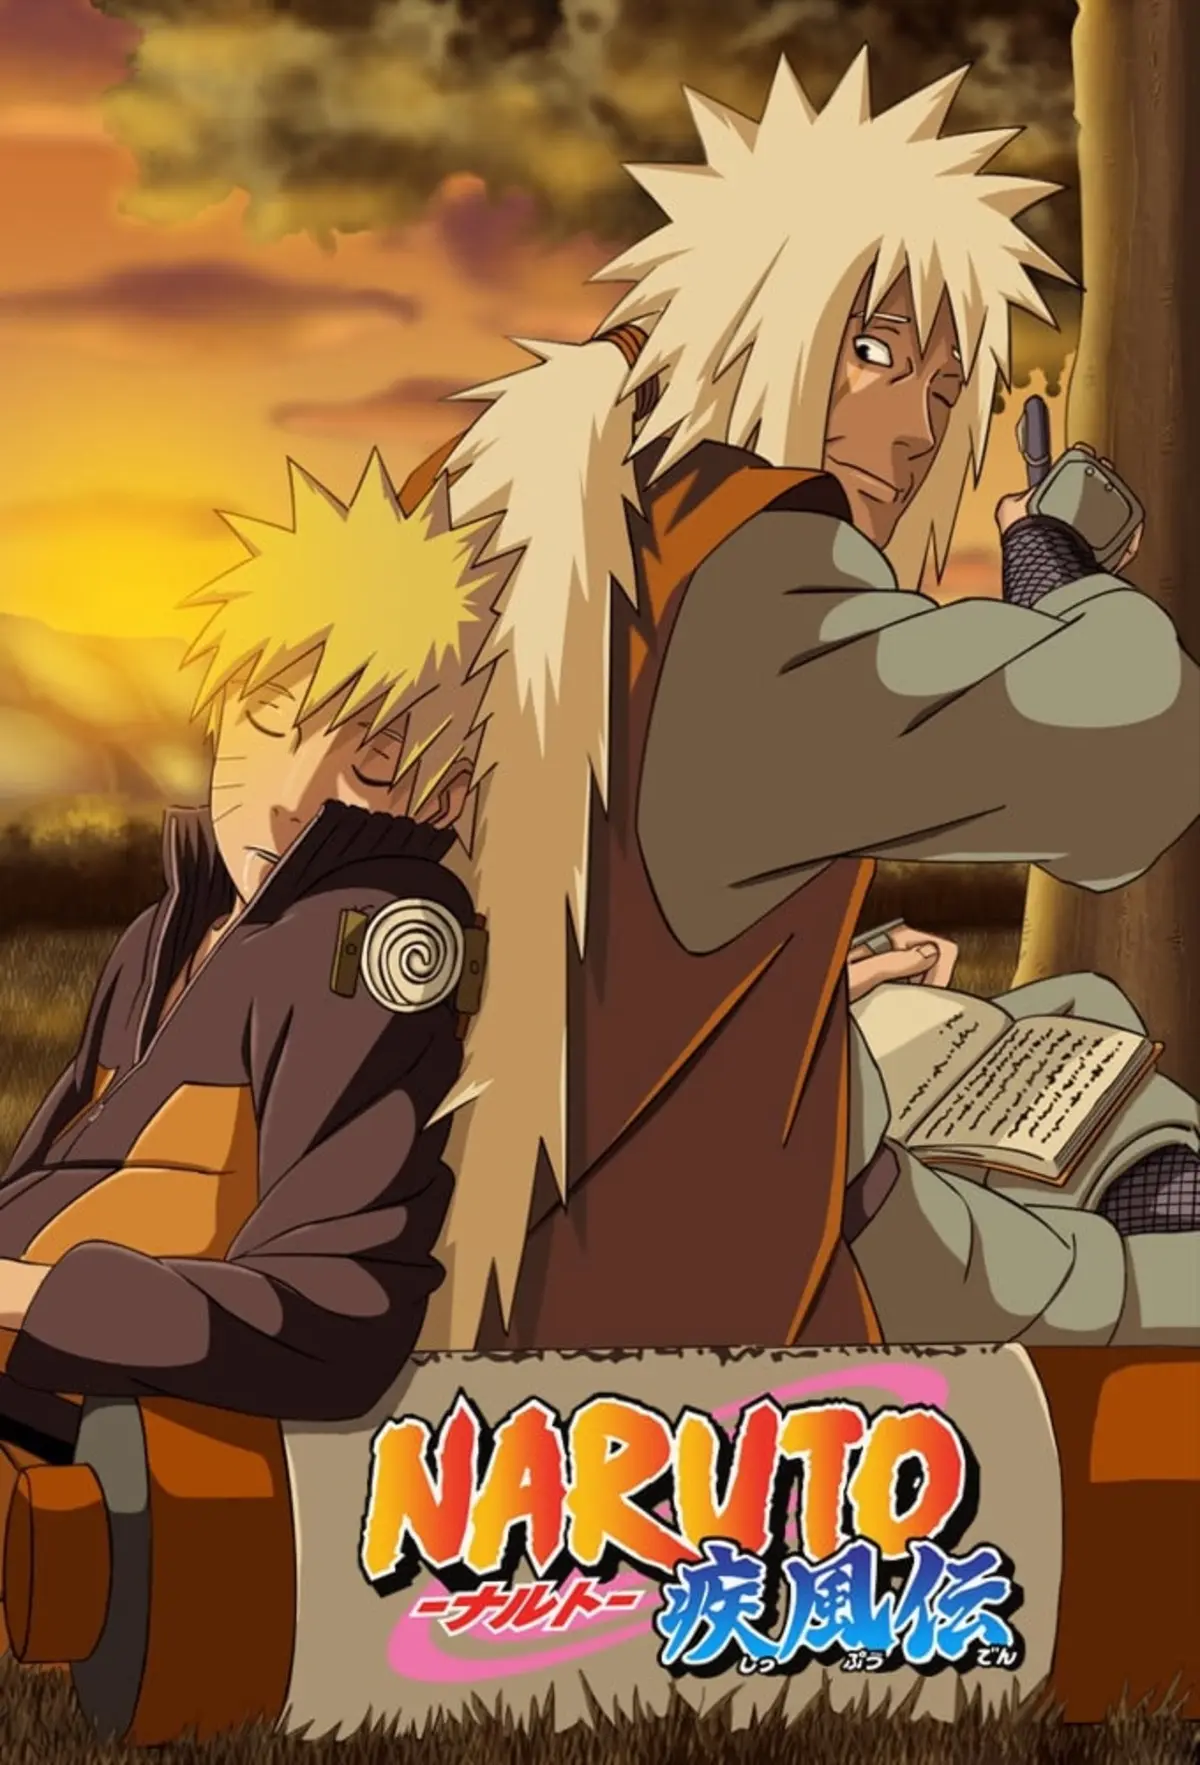 Naruto Shippuden S09E01 Chapitre de Konoha : Iruka, professeur novice